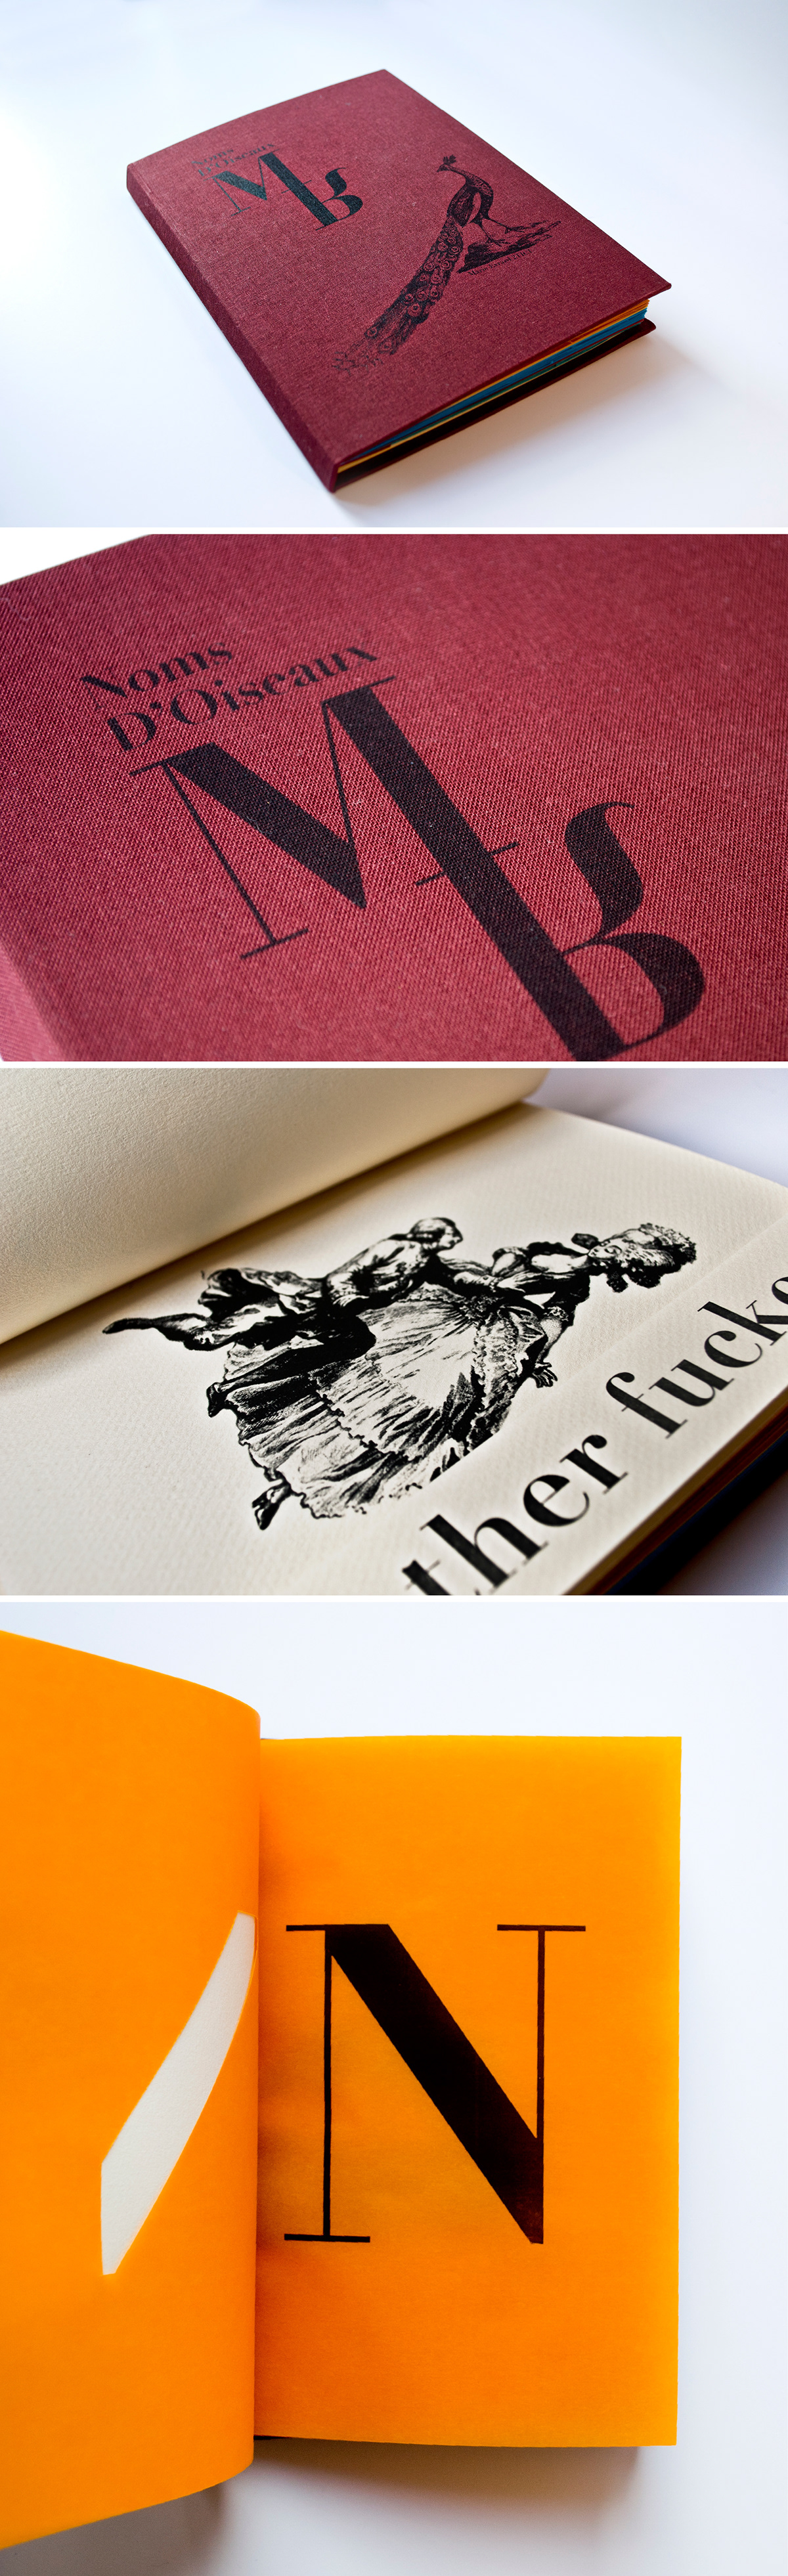 book paper fold folding design insultes gravure engraving colorfull